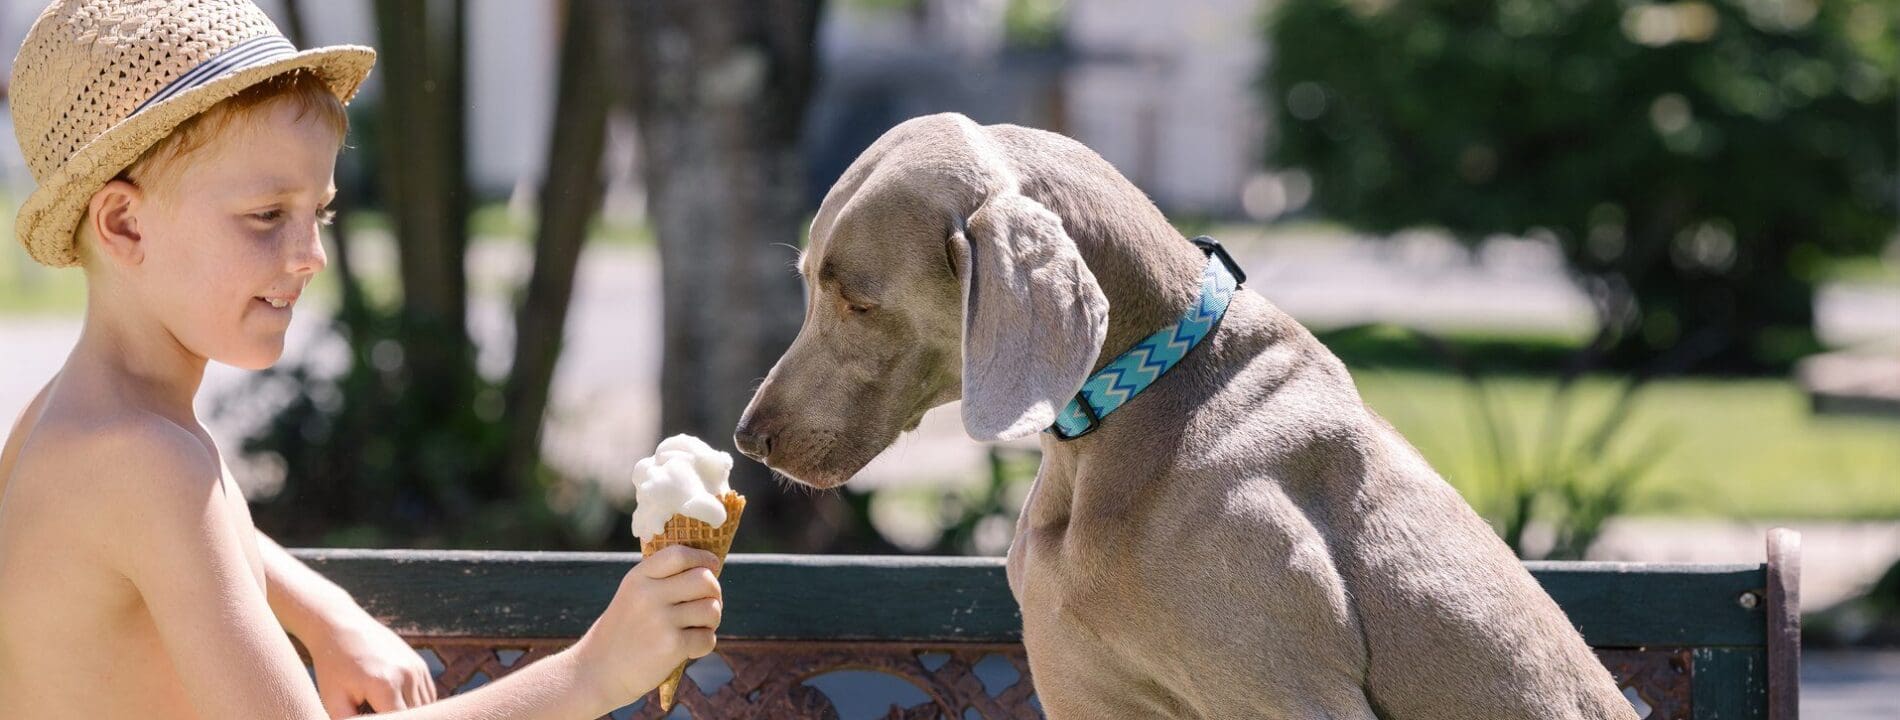 Ingenia Holidays Pet Friendly Holidays Parks - Boy feeding dog ice cream